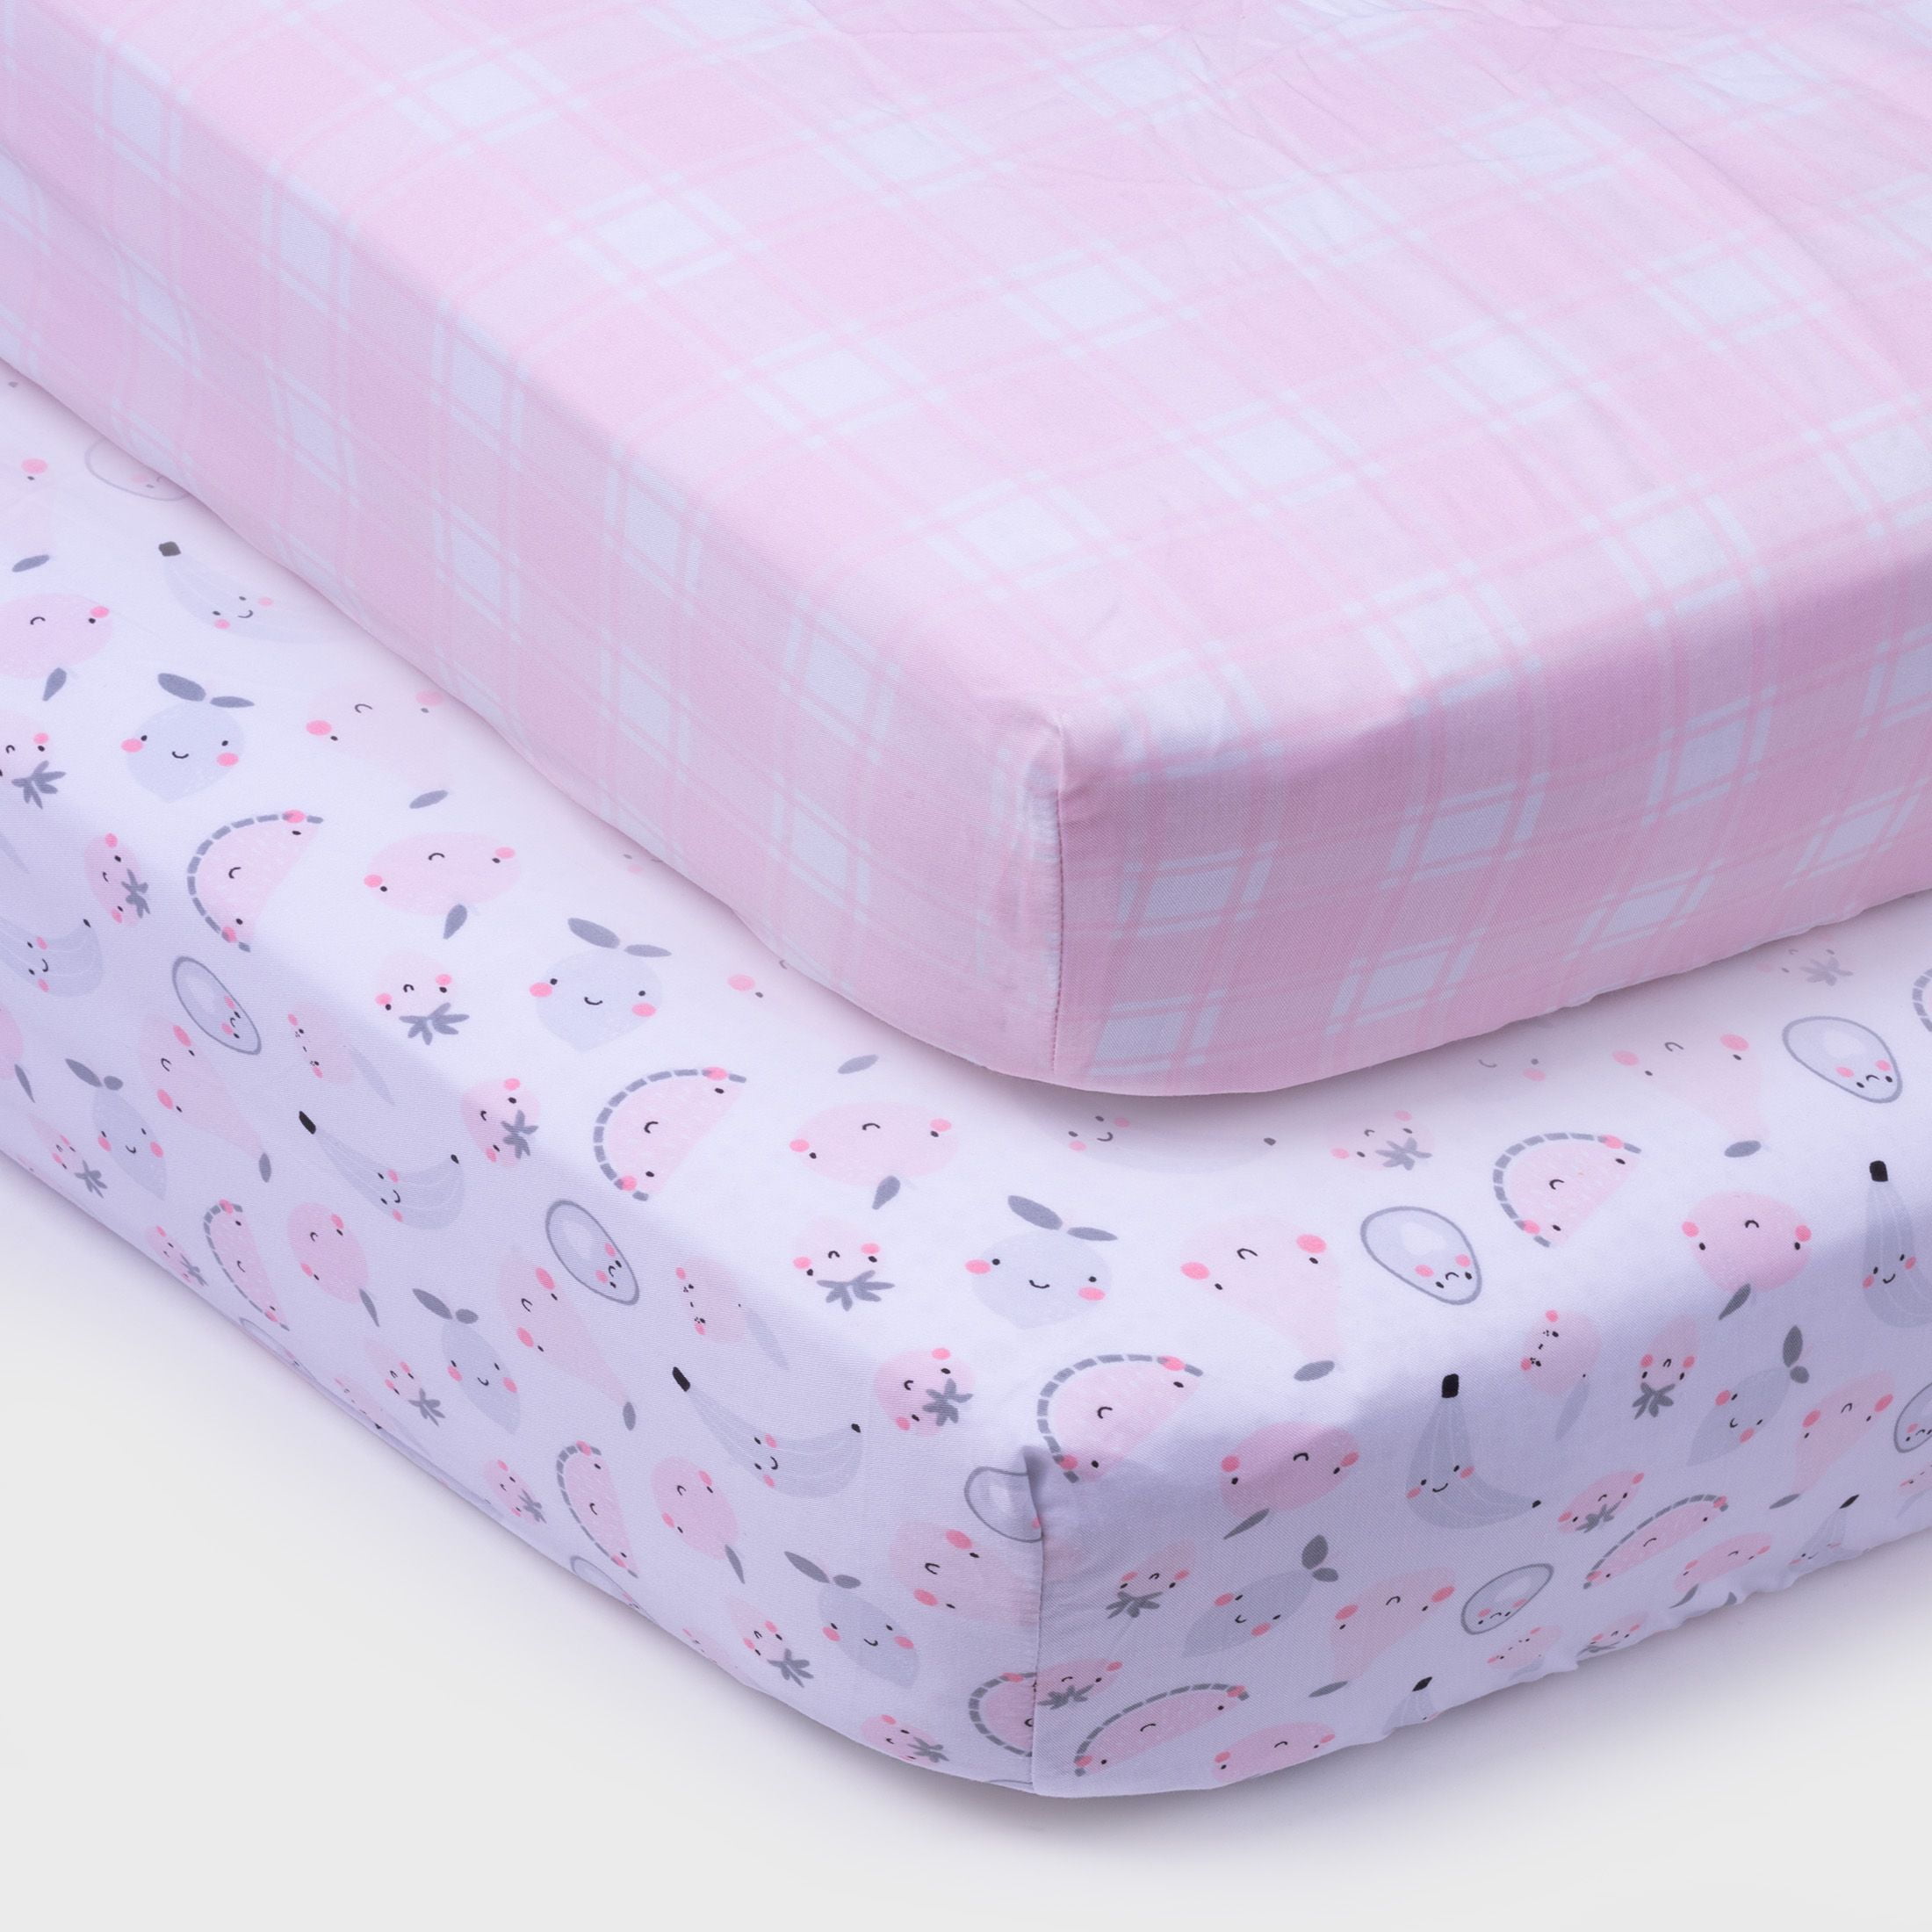 Handmade Cotton crib sheet/Hot Pink/small white  Dots /Neutral